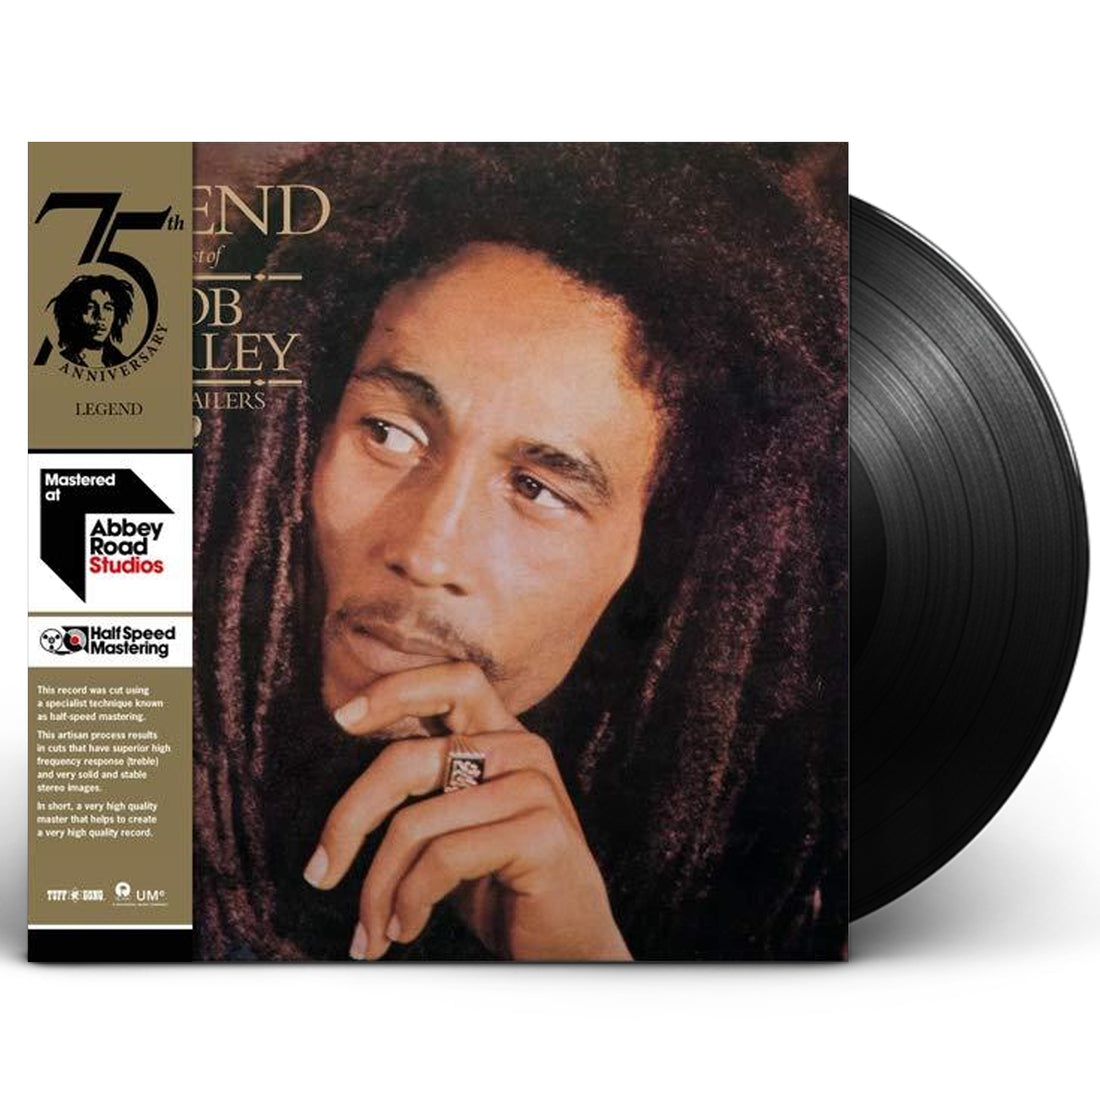 Bob Marley & The Wailers "Legend" Half-Speed Master LP Vinyl